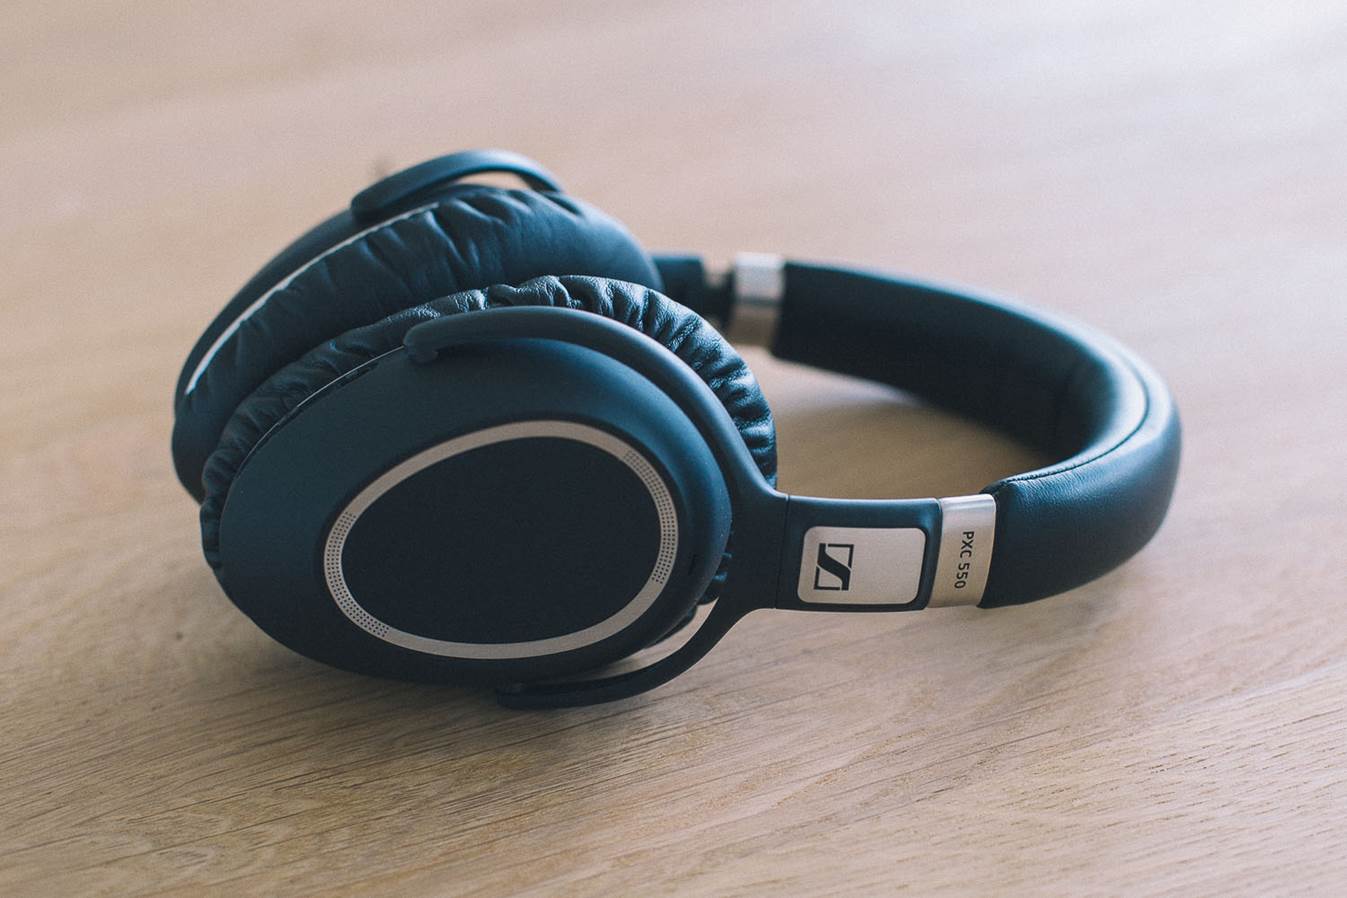 Sennheiser PXC 550 Bluetooth Noise Cancelling Headphones